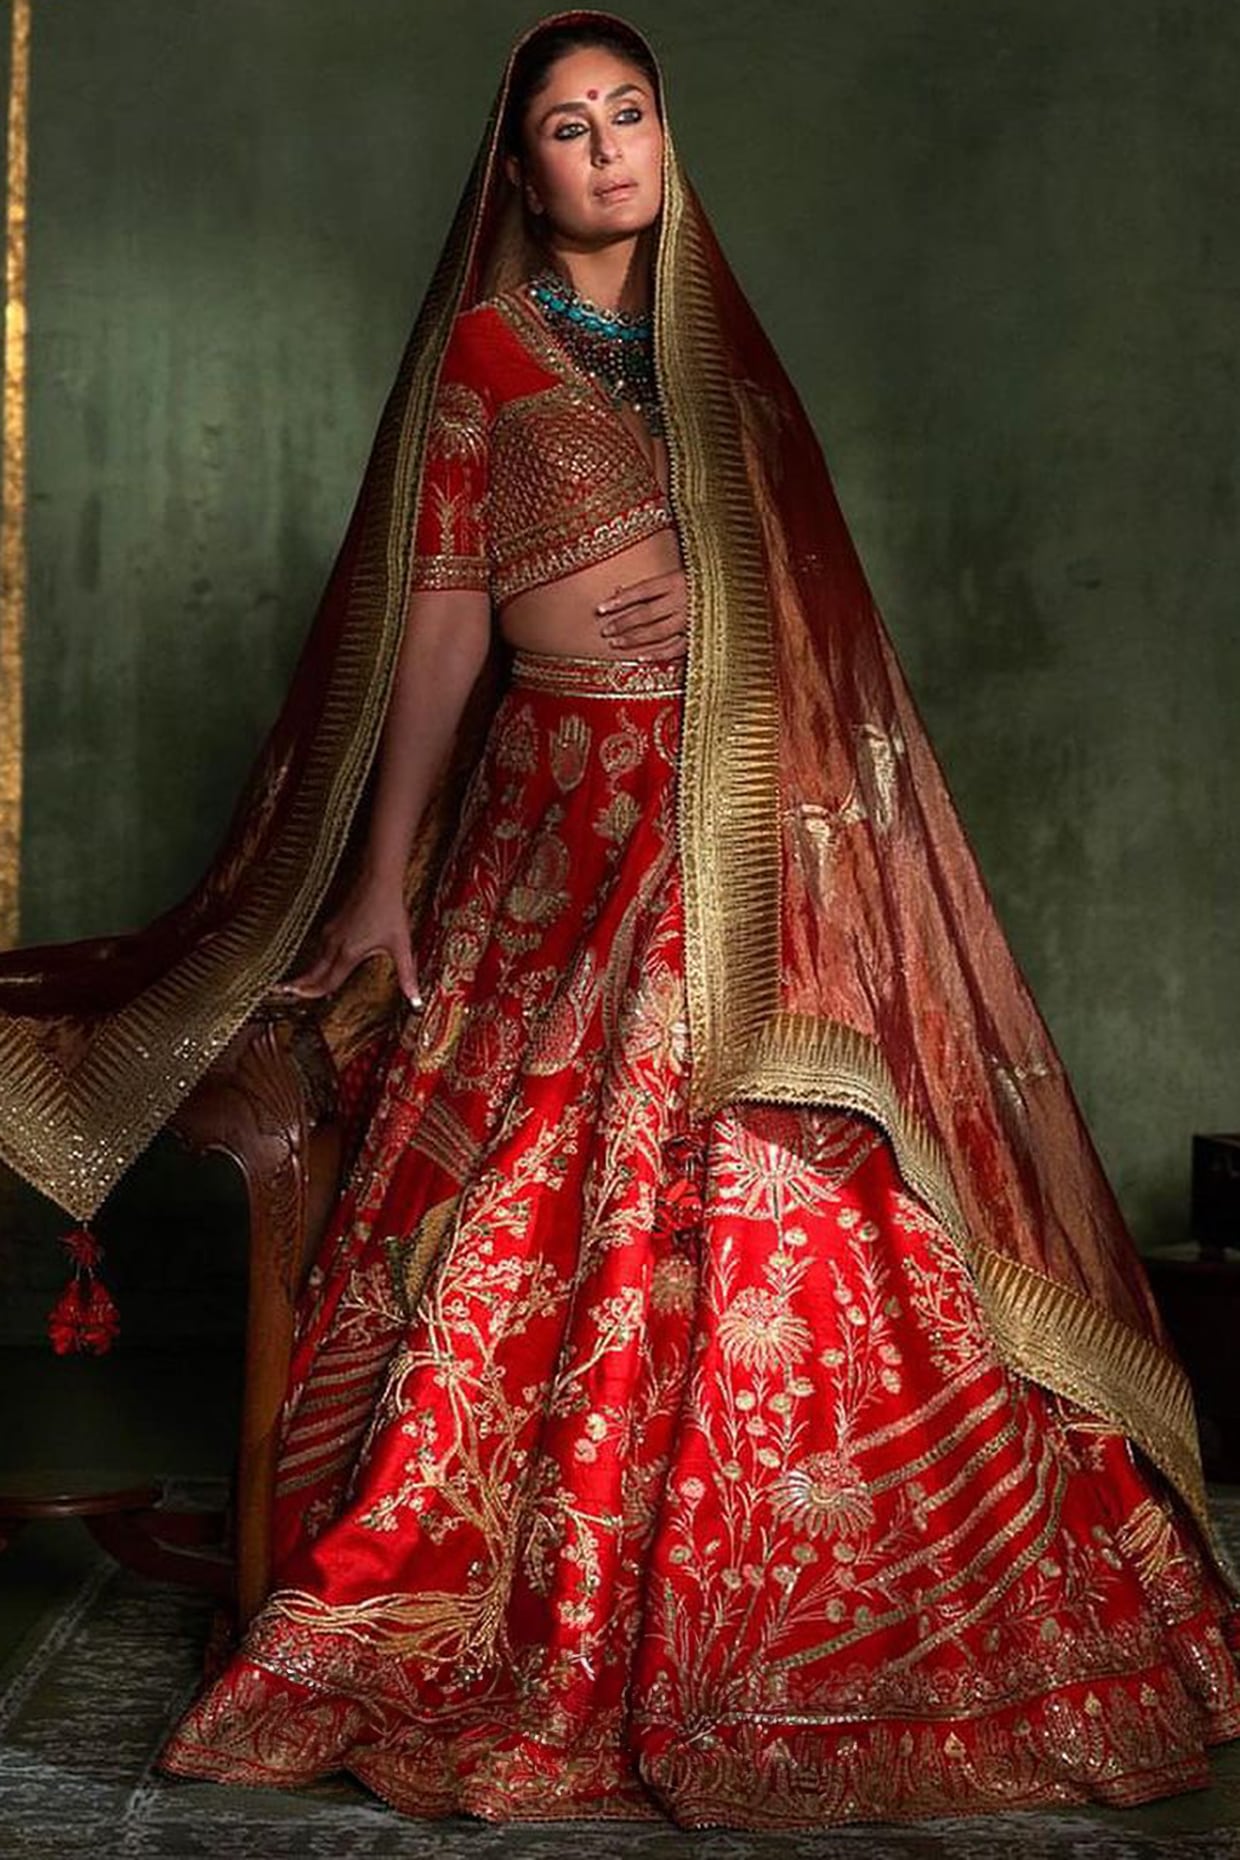 Kareena Kapoor's wedding: The bride wore Manish Malhotra